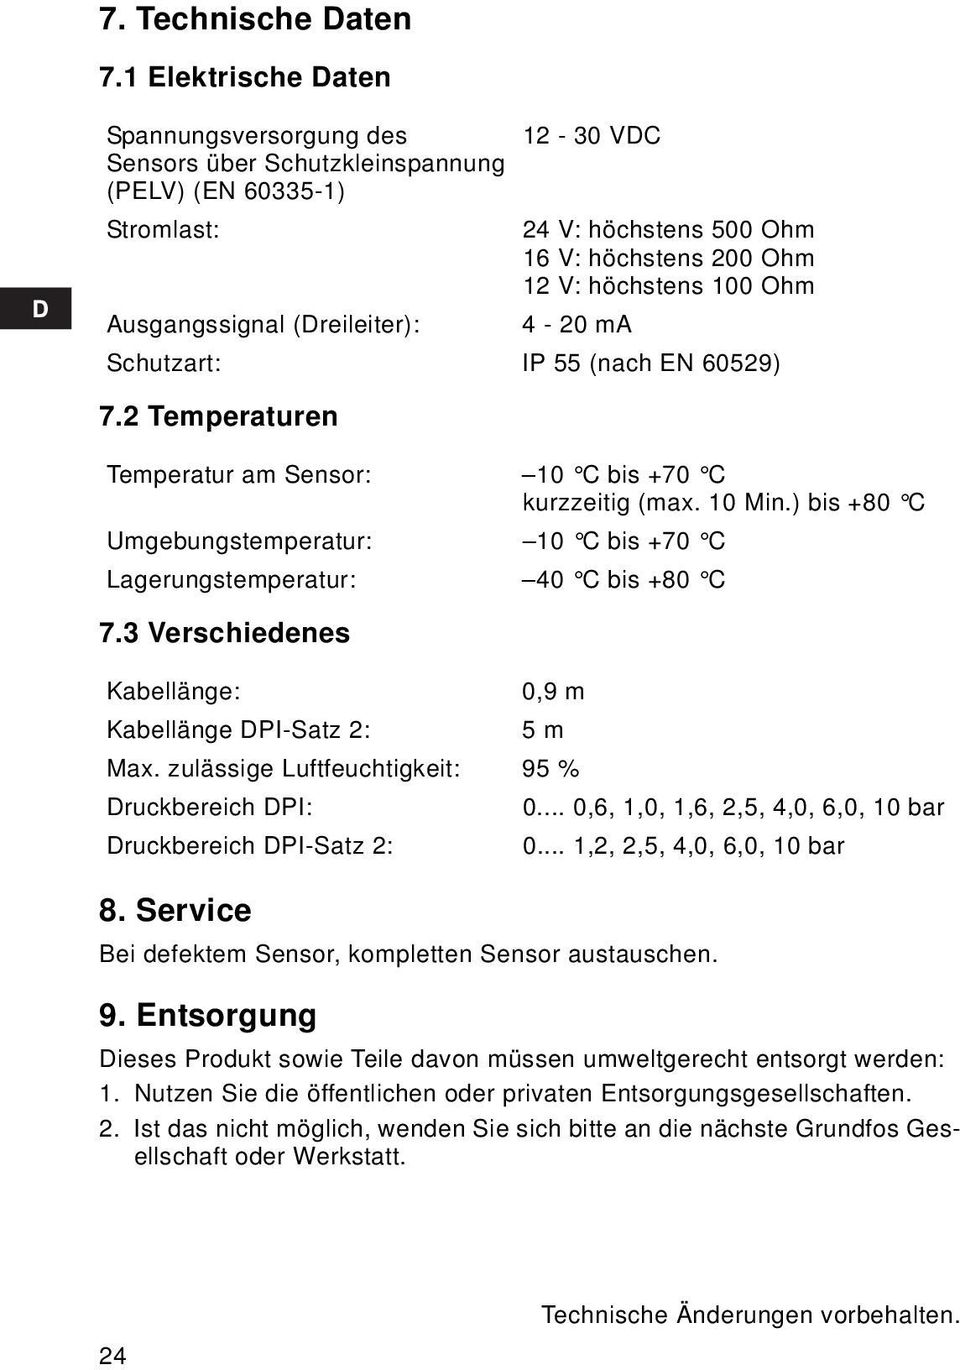 Entsorgung 12-30 VDC Stromlast: 24 V: höchstens 500 Ohm 16 V: höchstens 200 Ohm 12 V: höchstens 100 Ohm Ausgangssignal (Dreileiter): 4-20 ma Schutzart: IP 55 (nach EN 60529) Temperatur am Sensor: 10